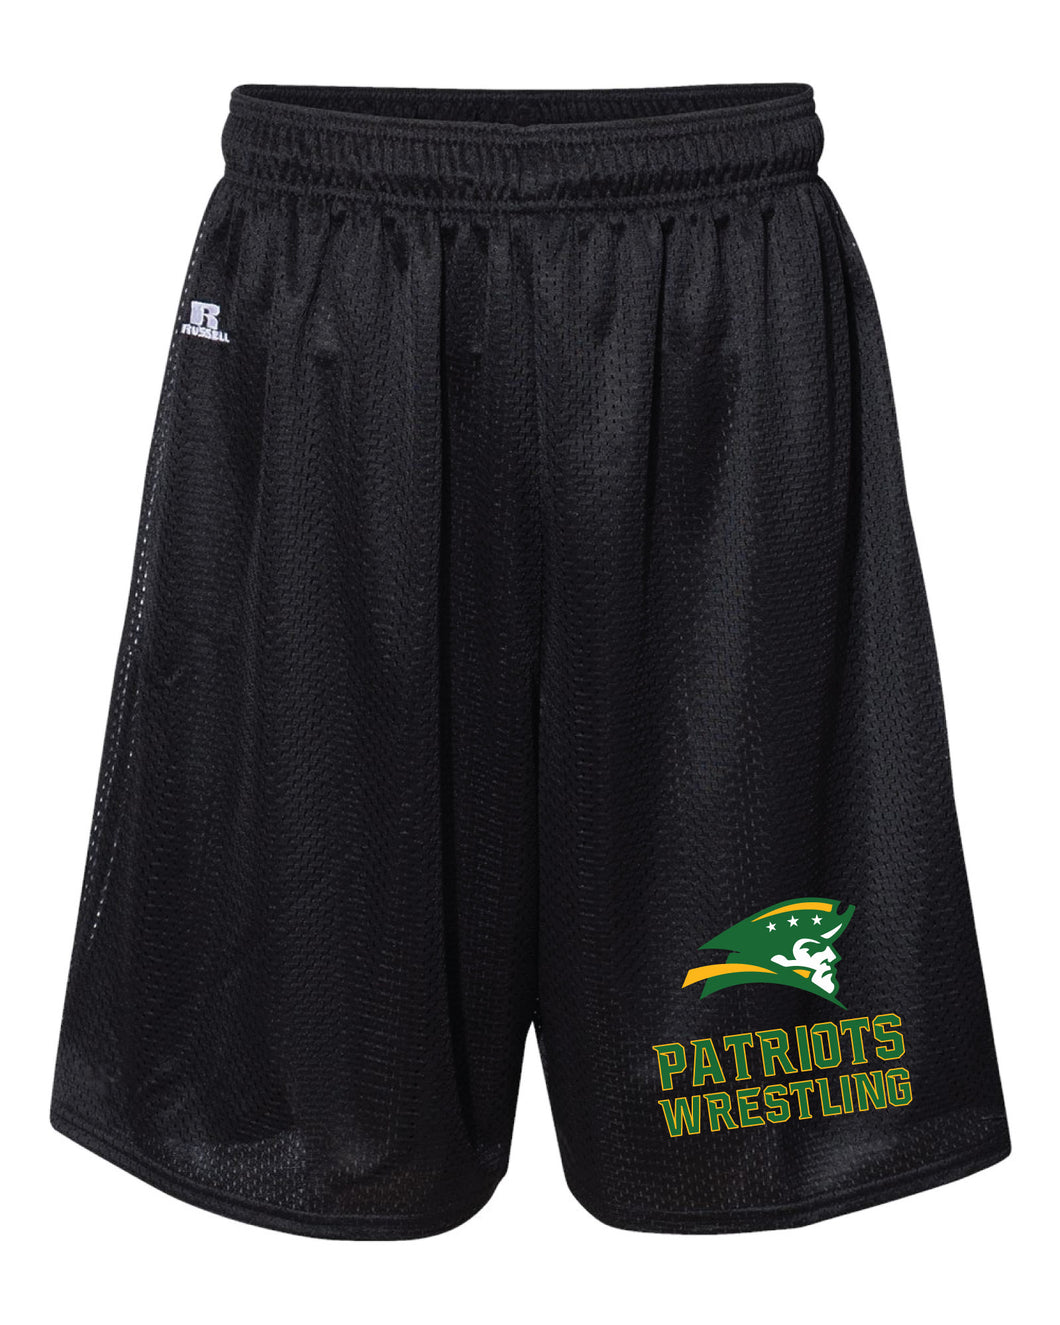 Patriots Wrestling Russell Athletic Tech Shorts - Black - 5KounT